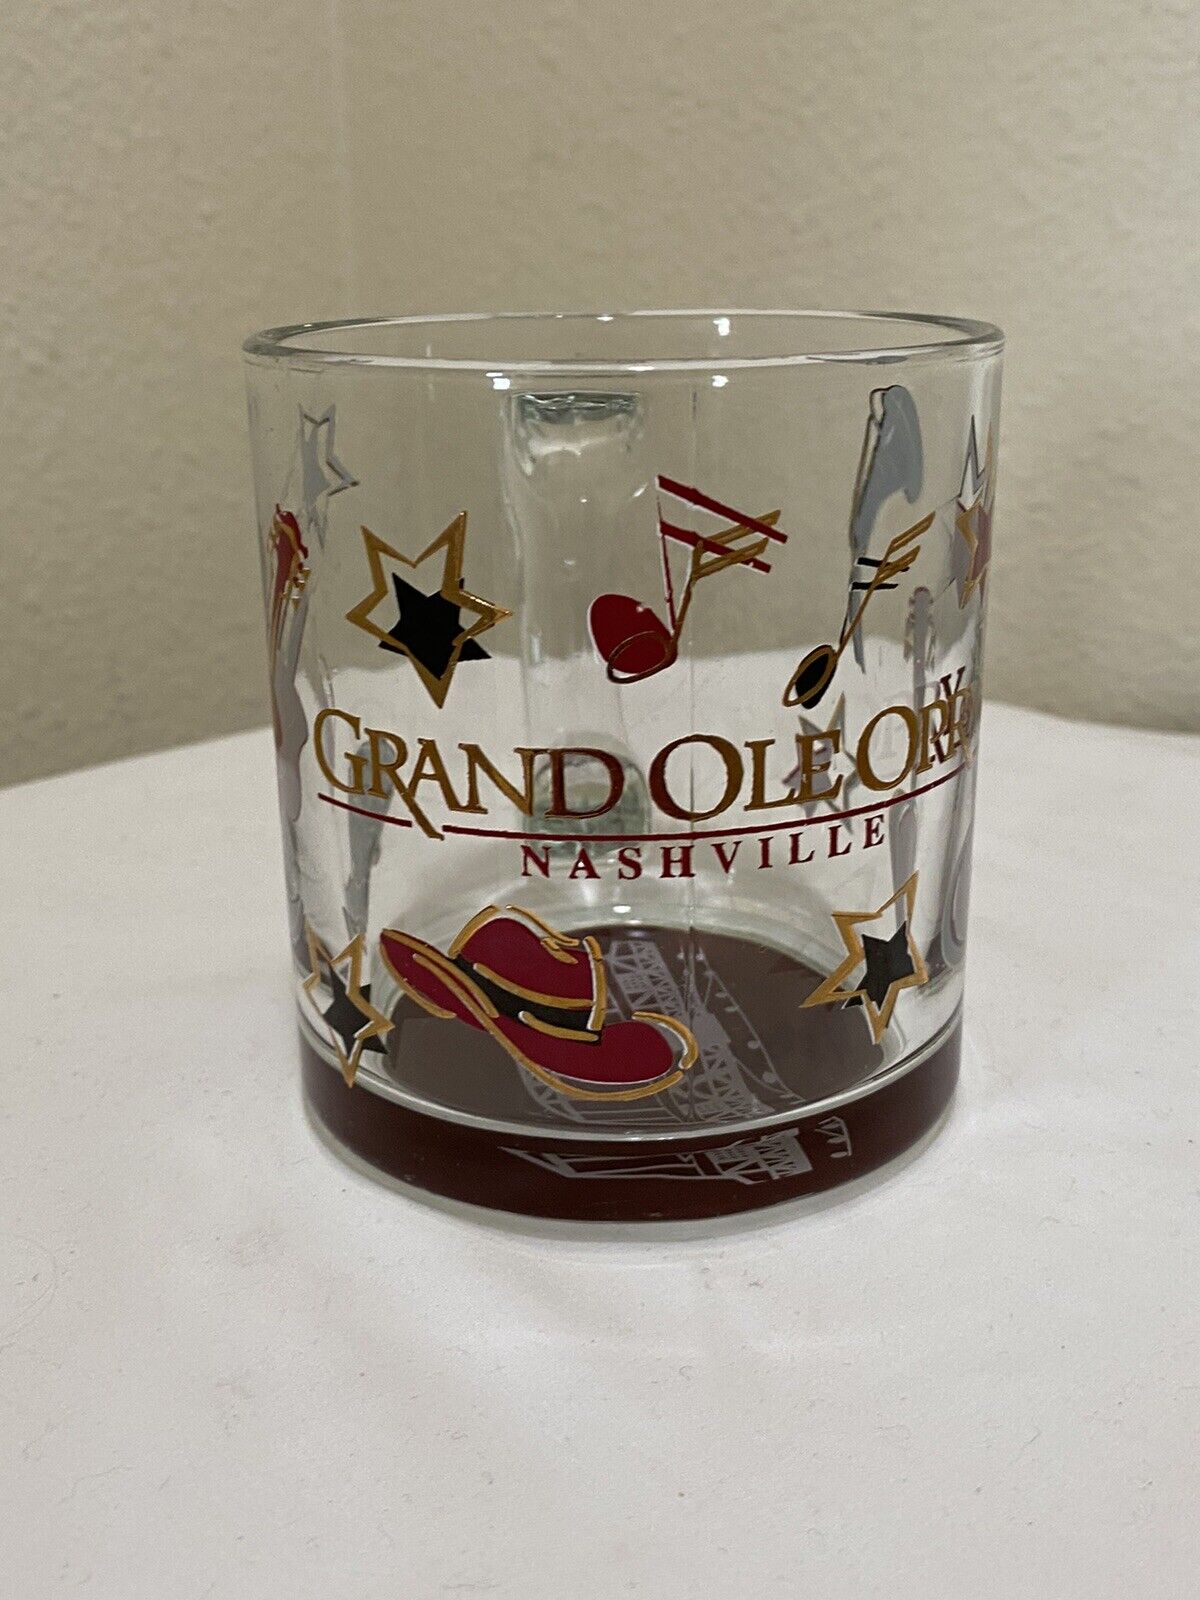 Grand Ole Opry Glass Coffee Mug Nashville Opry House Cup Guitar Sketch on Bottom